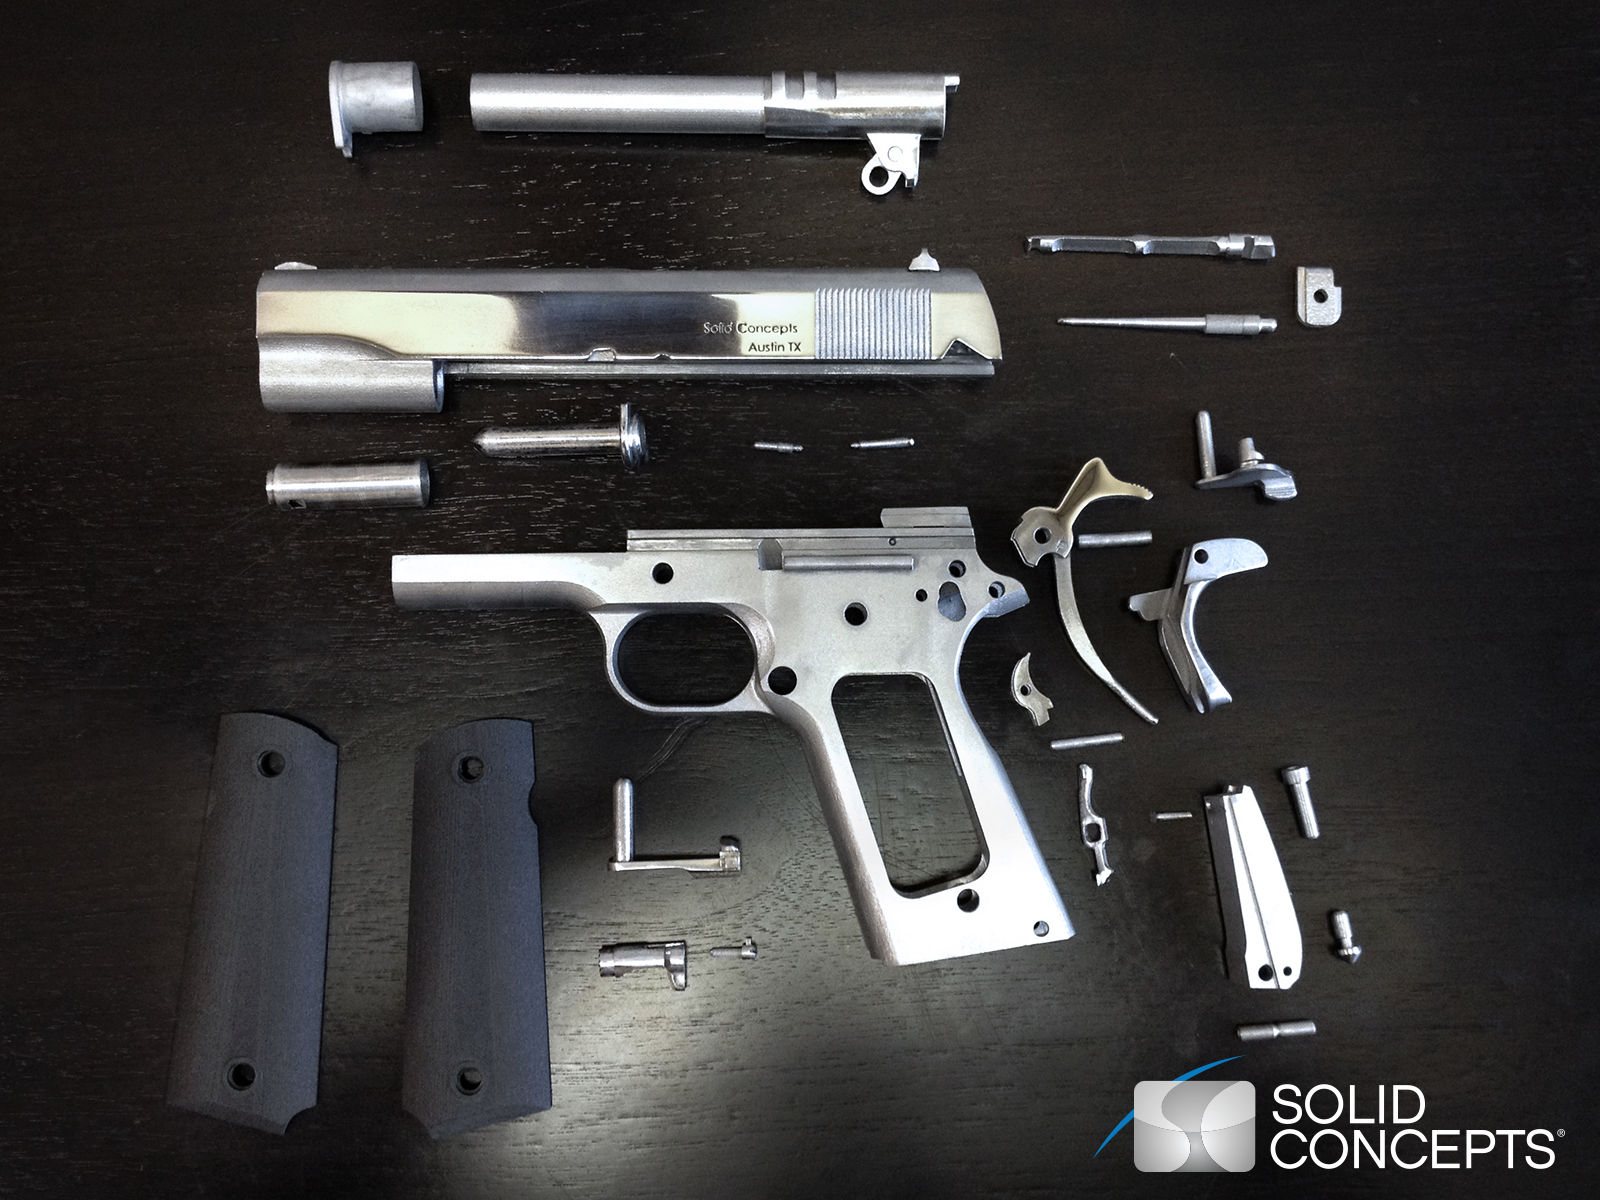 Solid Concepts 3D prints world's first metal gun (w/ Video)